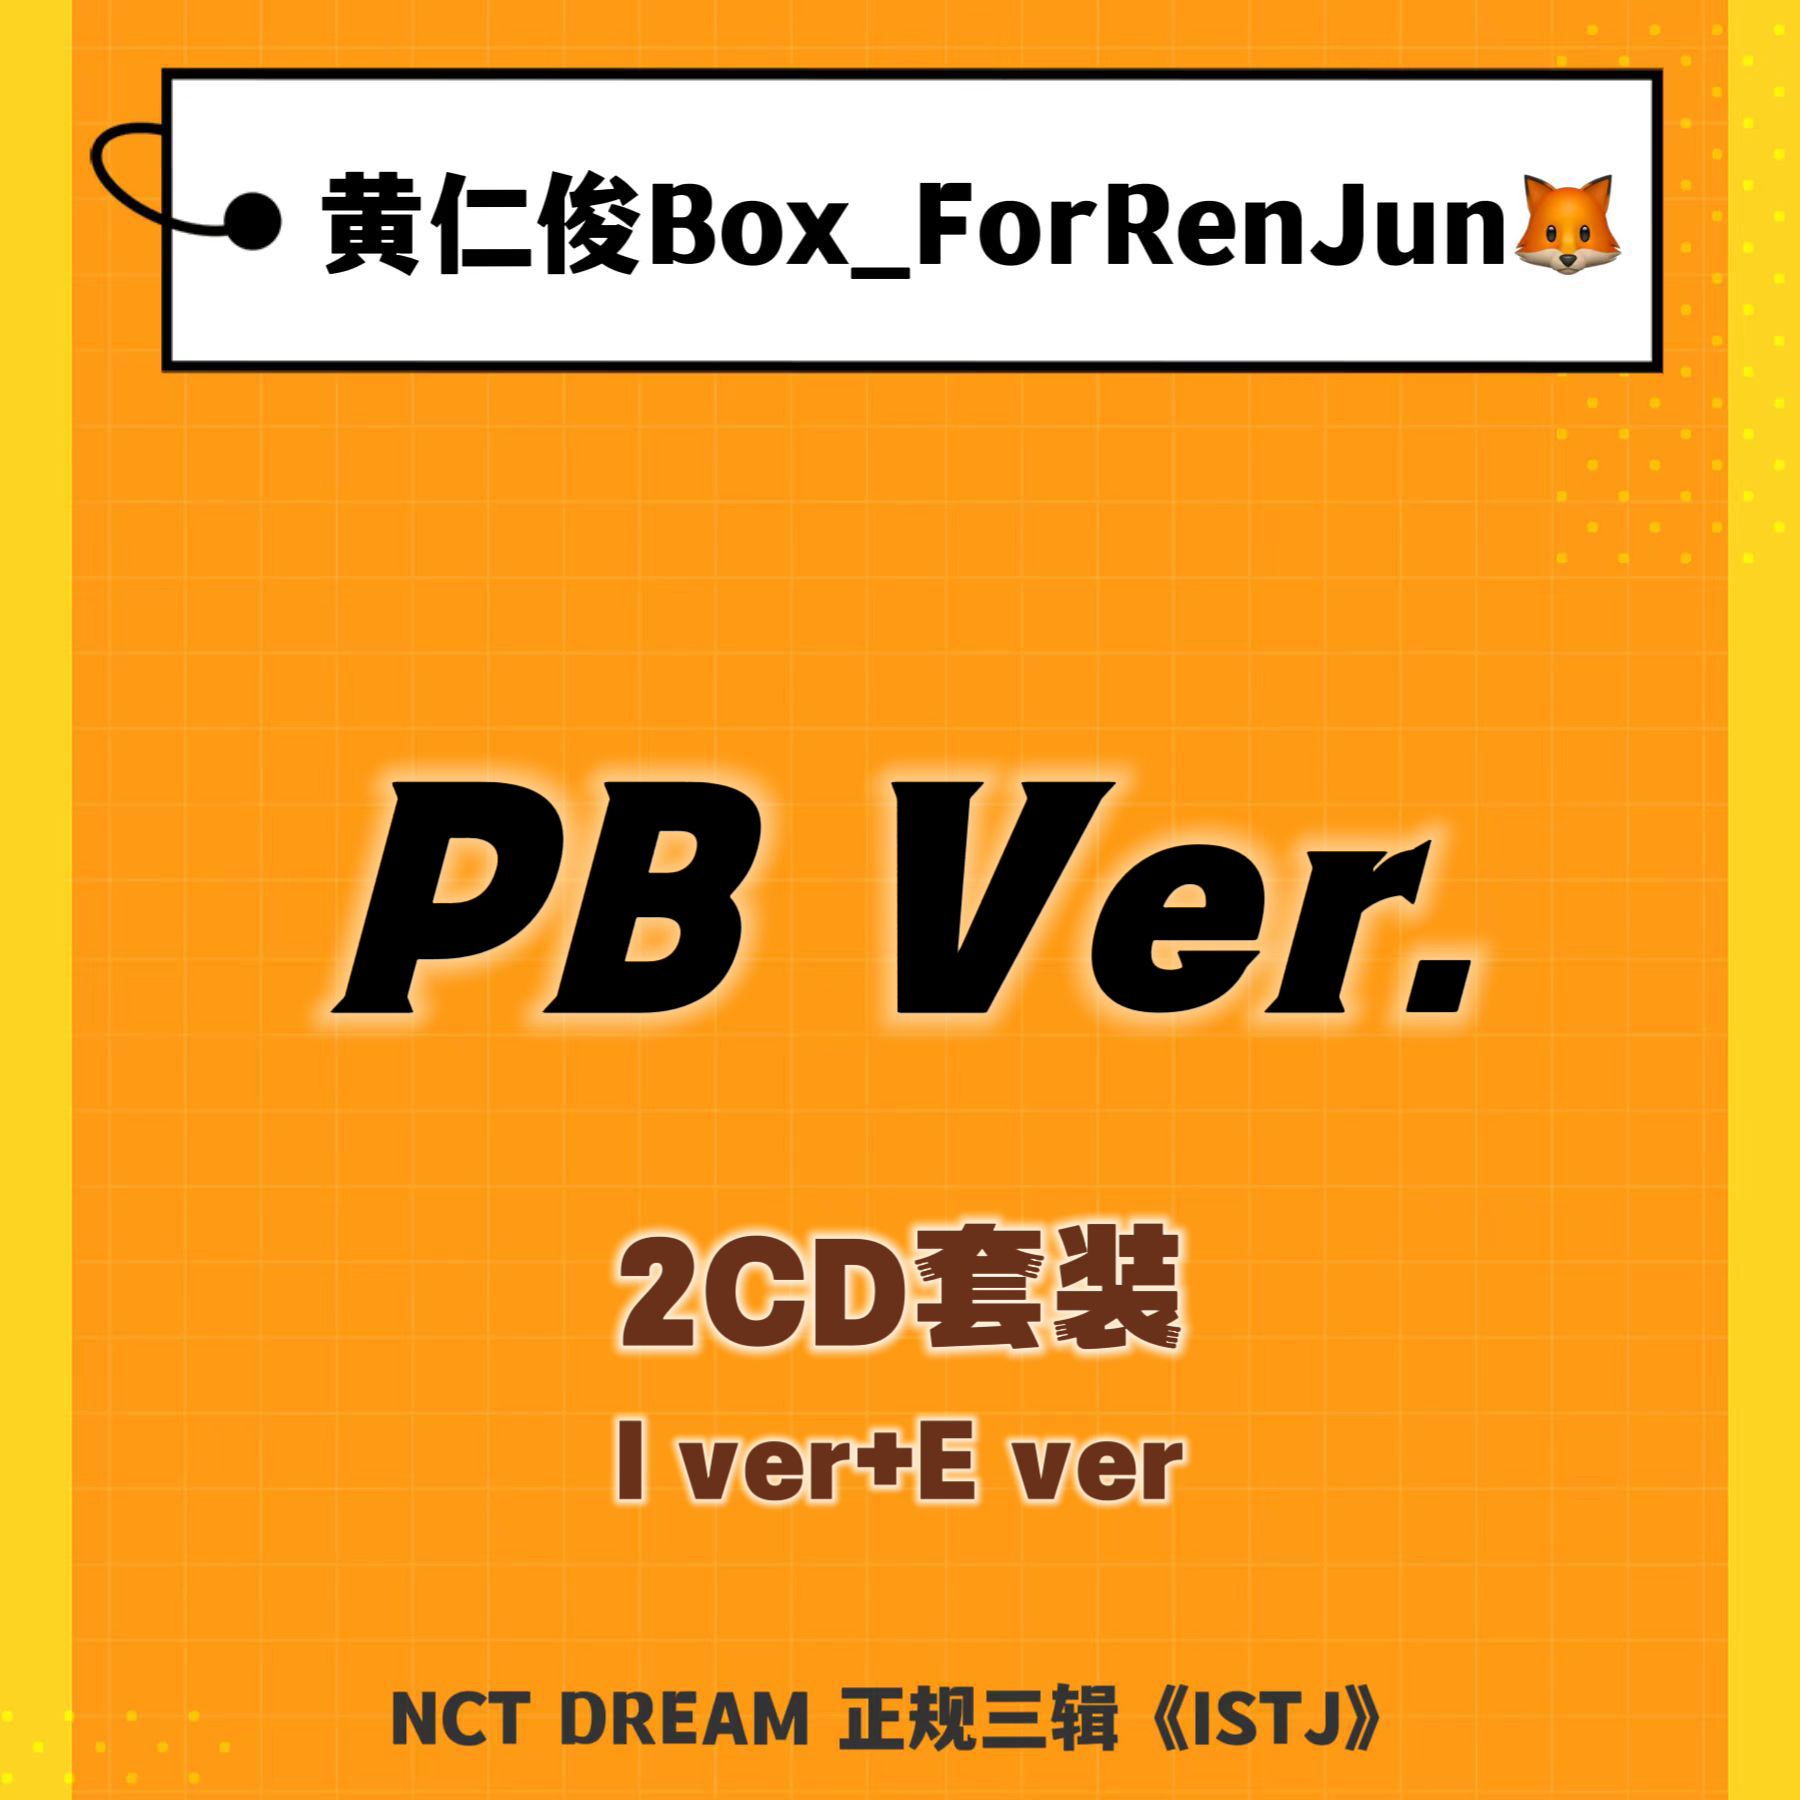 [全款 裸专] [Ktown4u Special Gift] [2CD 套装] NCT DREAM - 正规3辑 [ISTJ] (Photobook Ver.) (Introvert Ver. + Extrovert Ver.)_黄仁俊吧RenJunBar